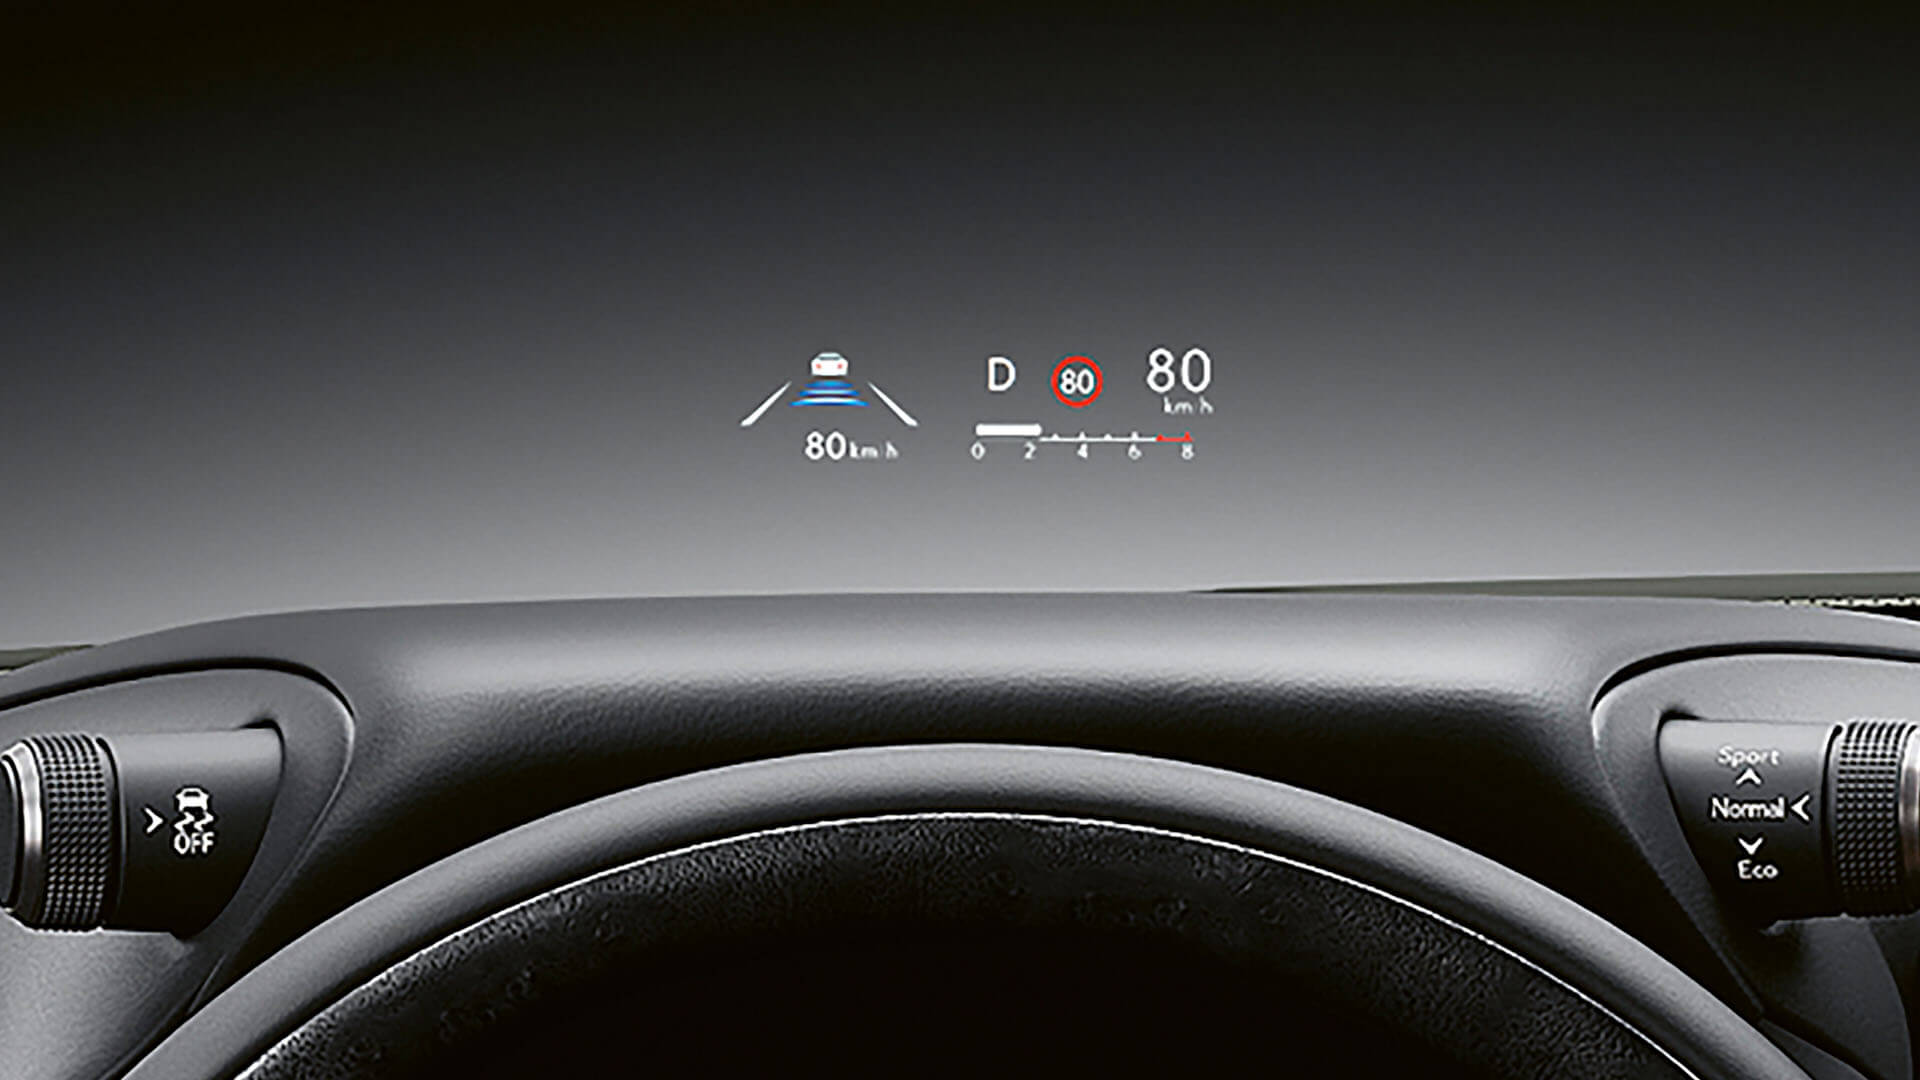 Lexus-interieur-display